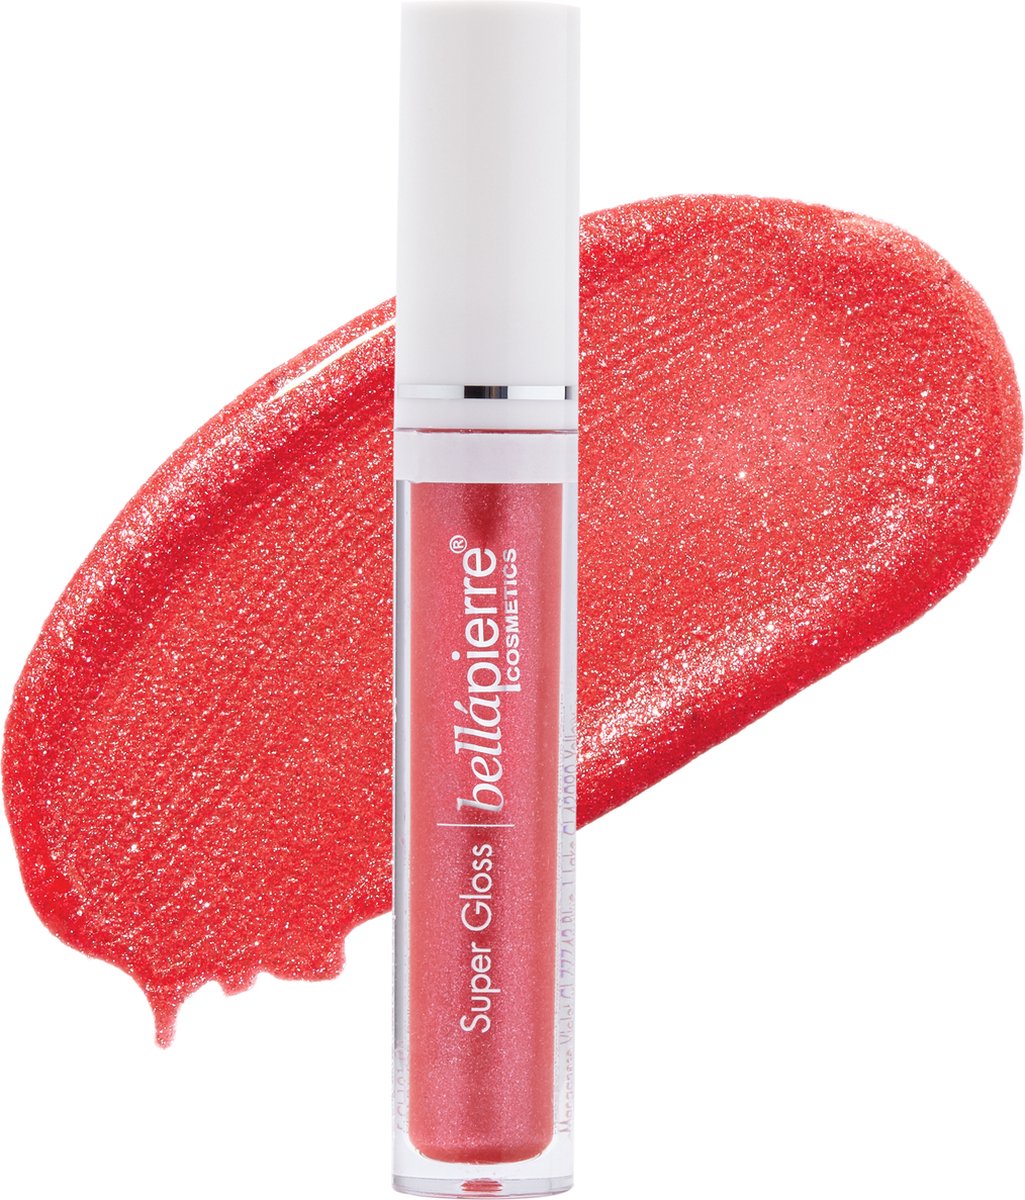 Bellapierre- Supergloss - Lipgloss - Lip verzorging - Make up - Very berry - Mineraal